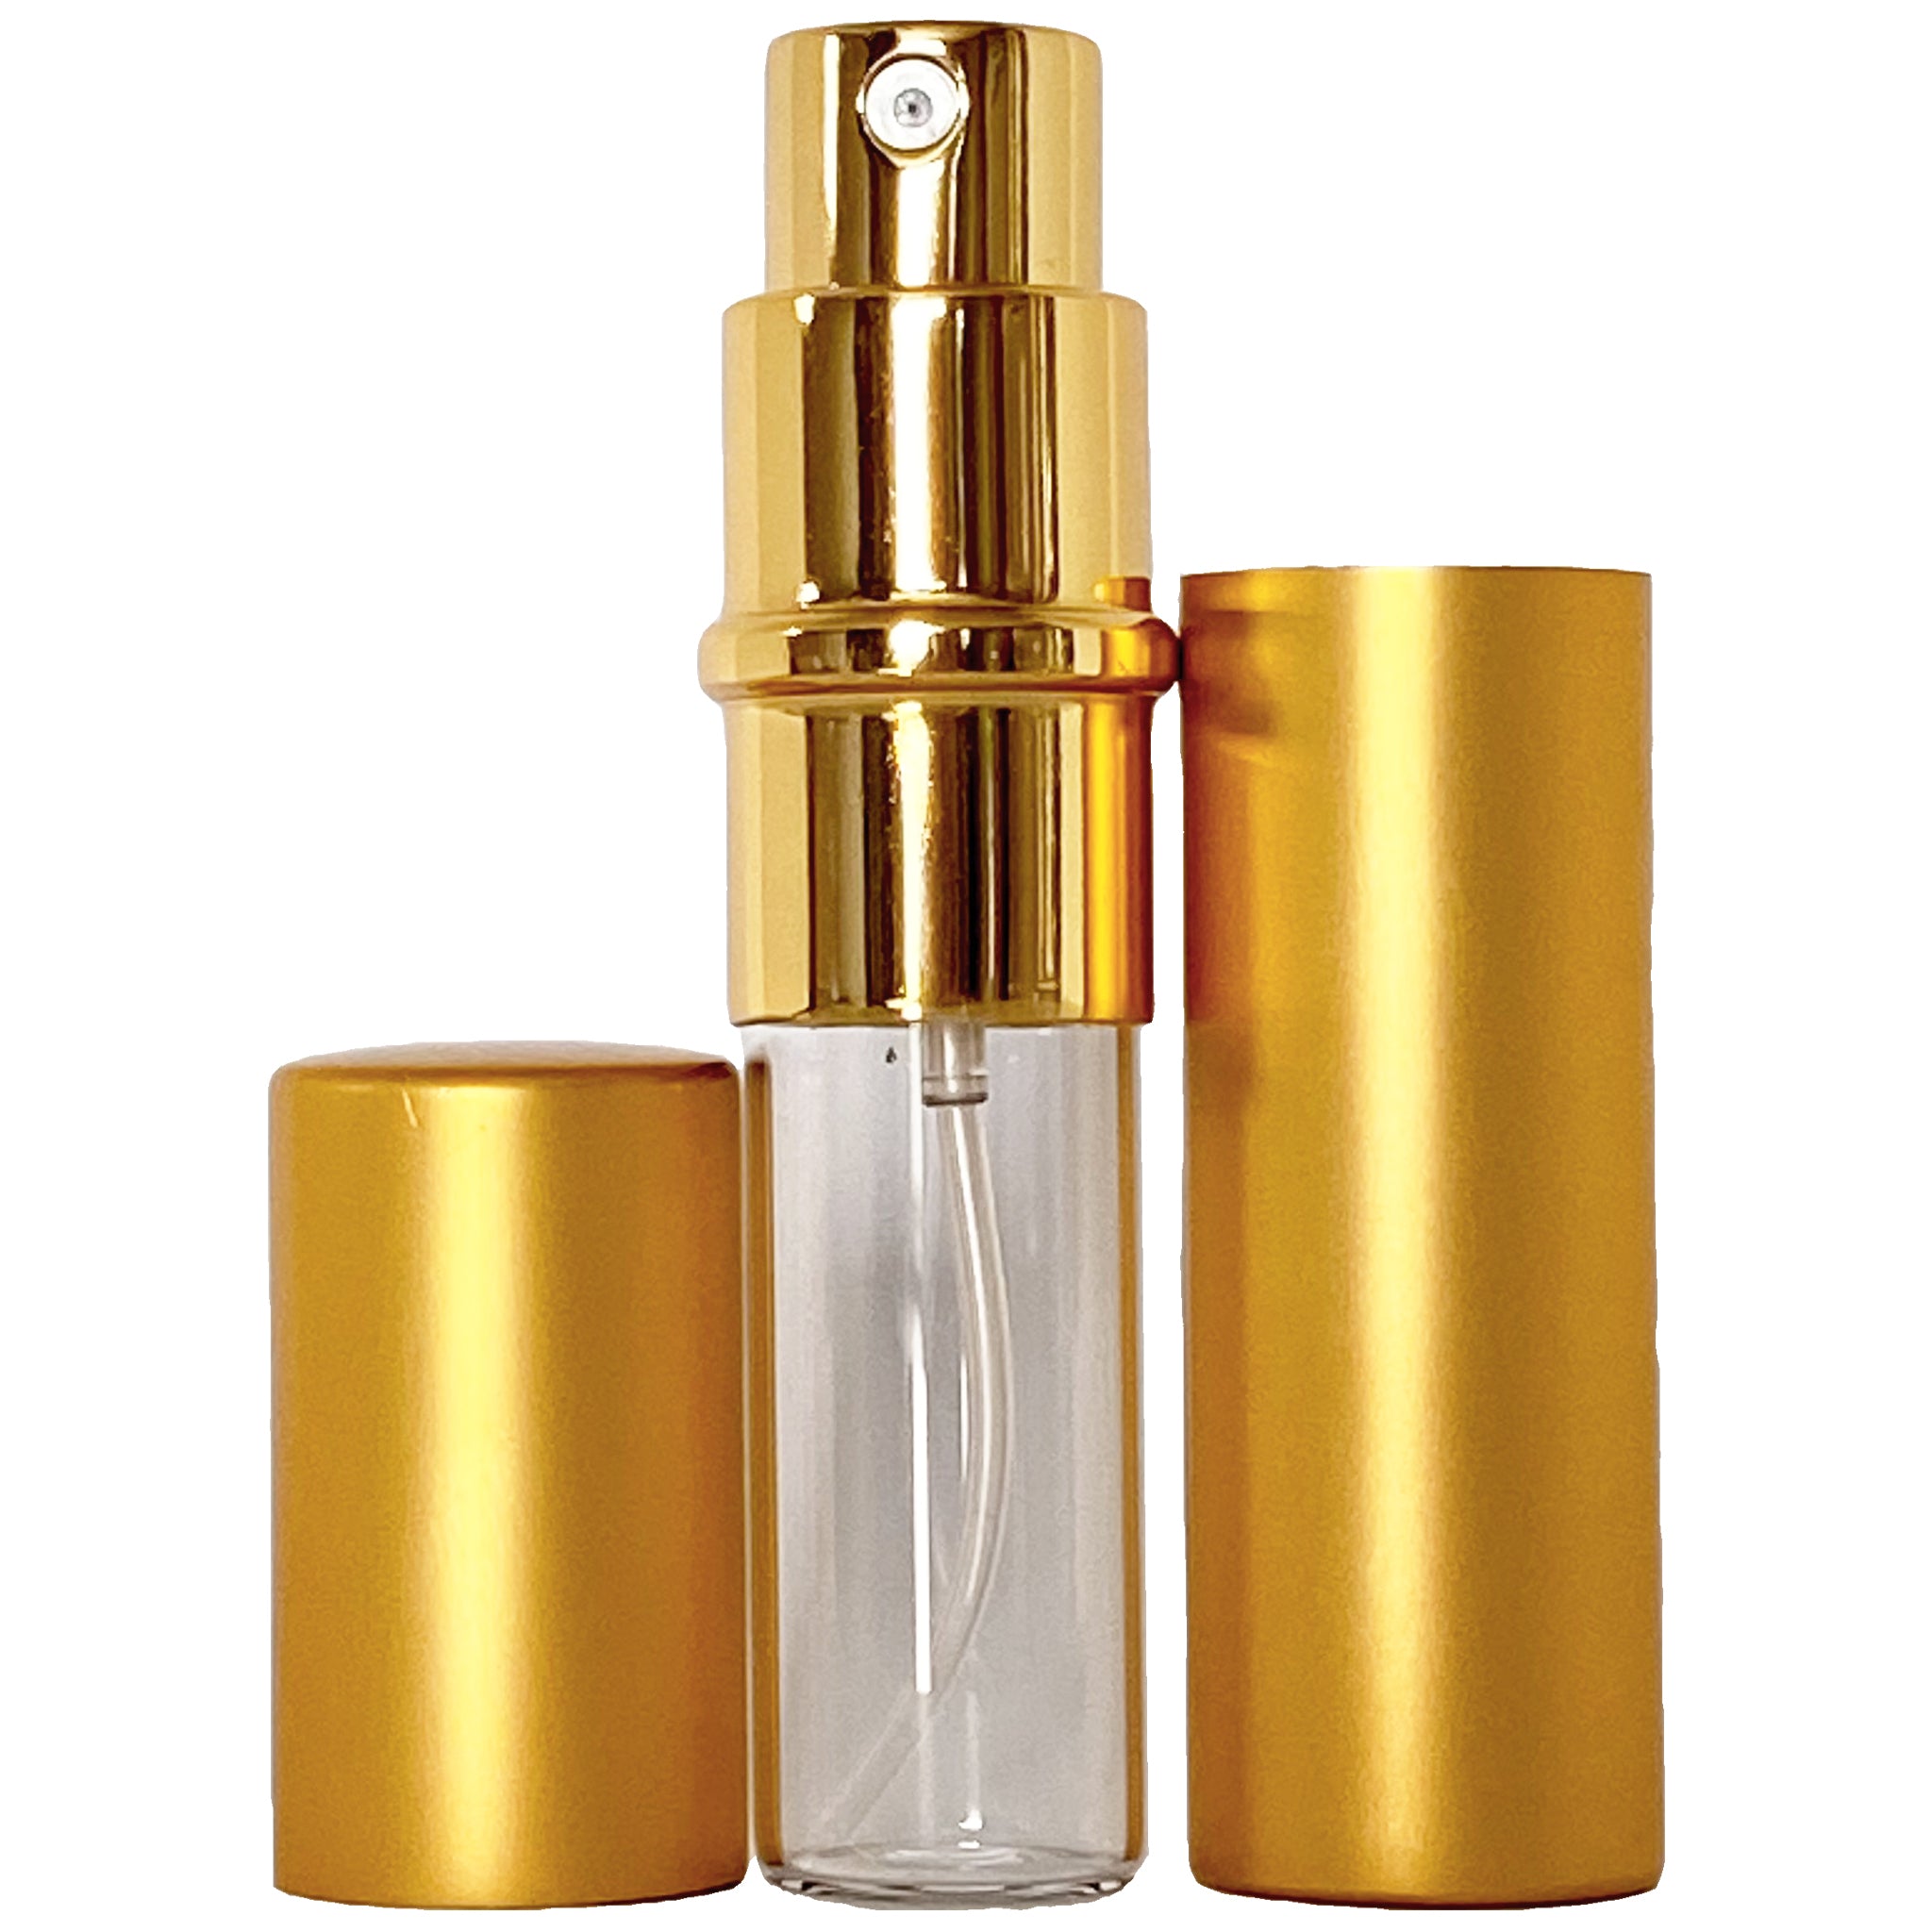 6ml 0.2oz Perfume Glass Spray Deluxe Bottles Gold Atomizers